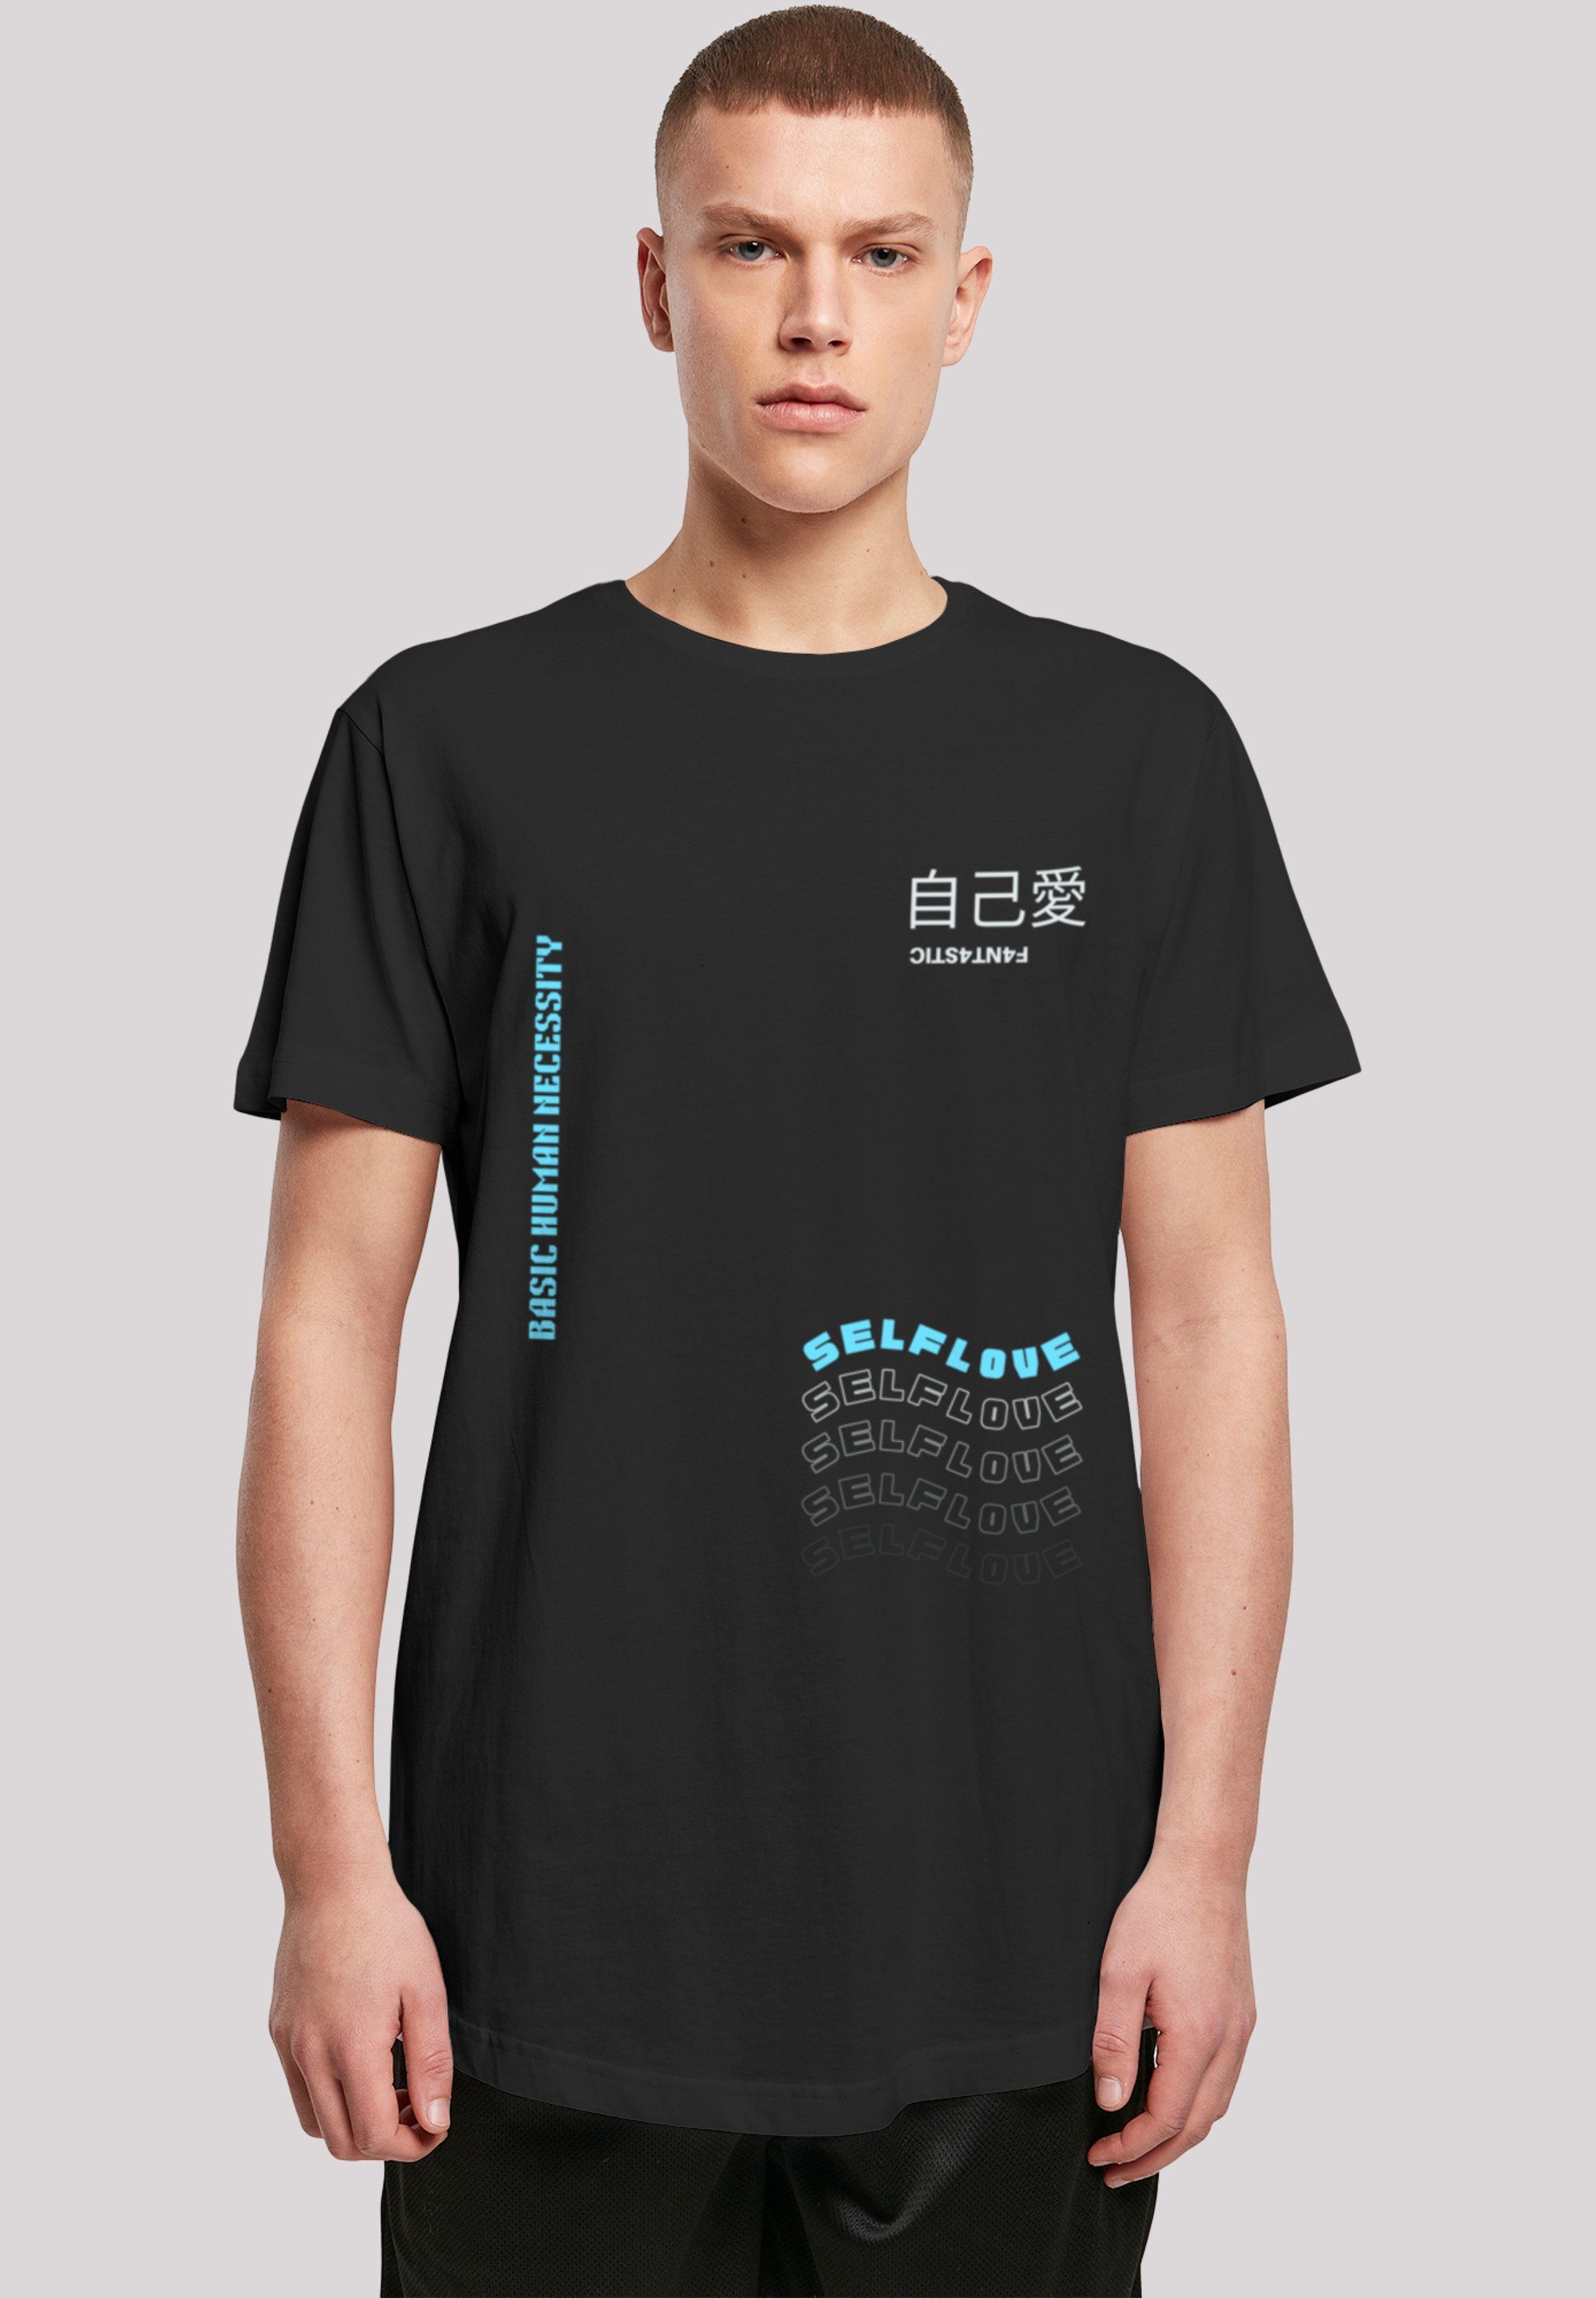 F4NT4STIC TEE Self Love LONG schwarz T-Shirt Print